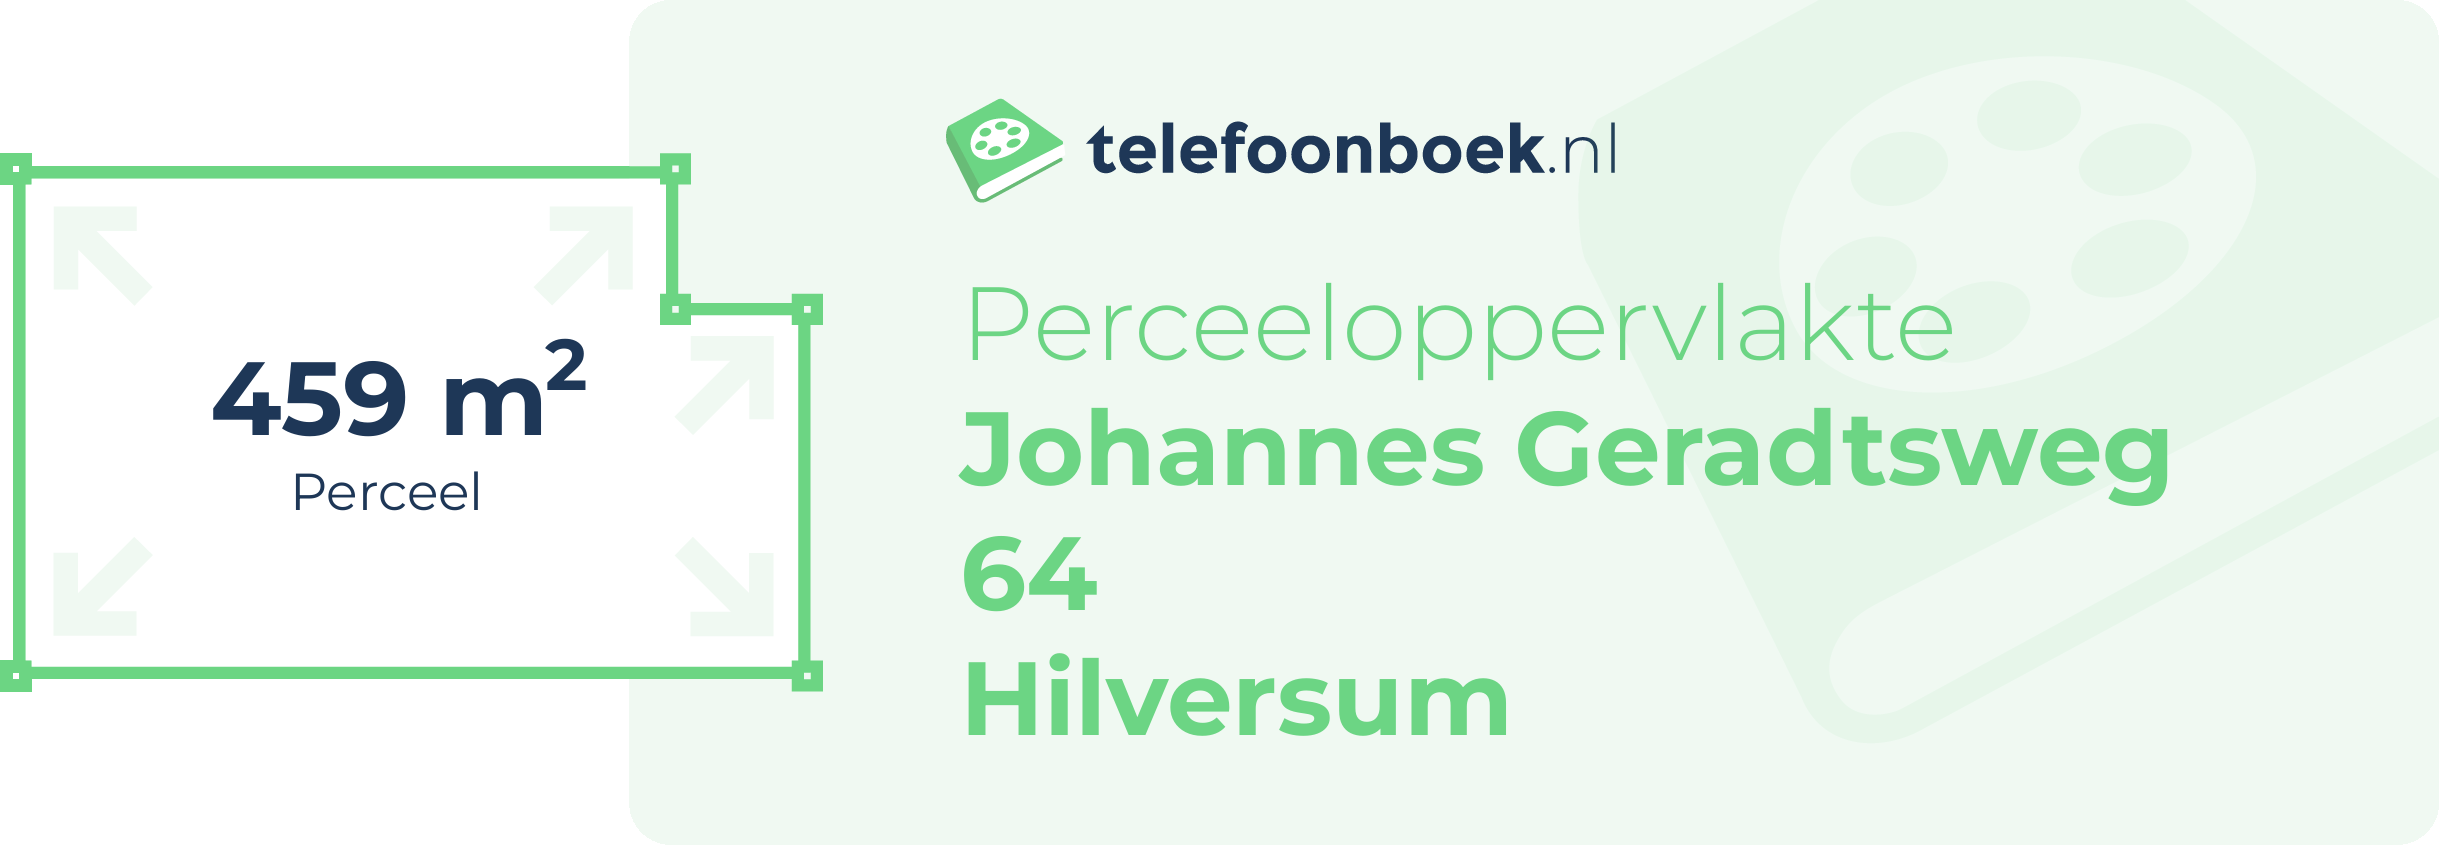 Perceeloppervlakte Johannes Geradtsweg 64 Hilversum